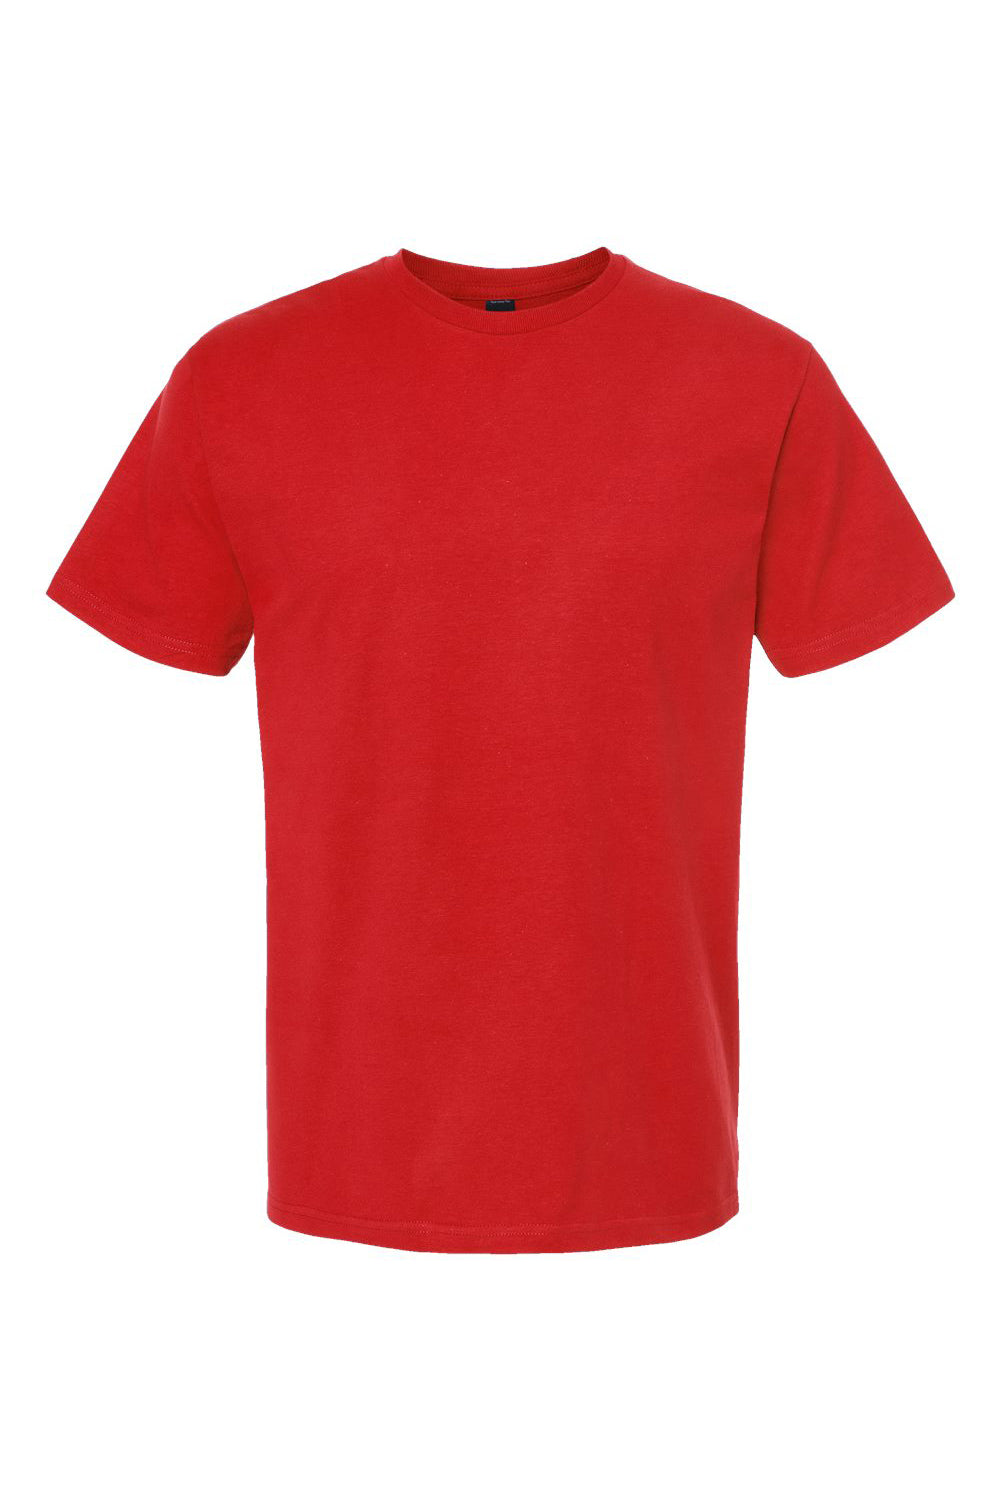 Tultex 290 Mens Jersey Short Sleeve Crewneck T-Shirt Red Flat Front